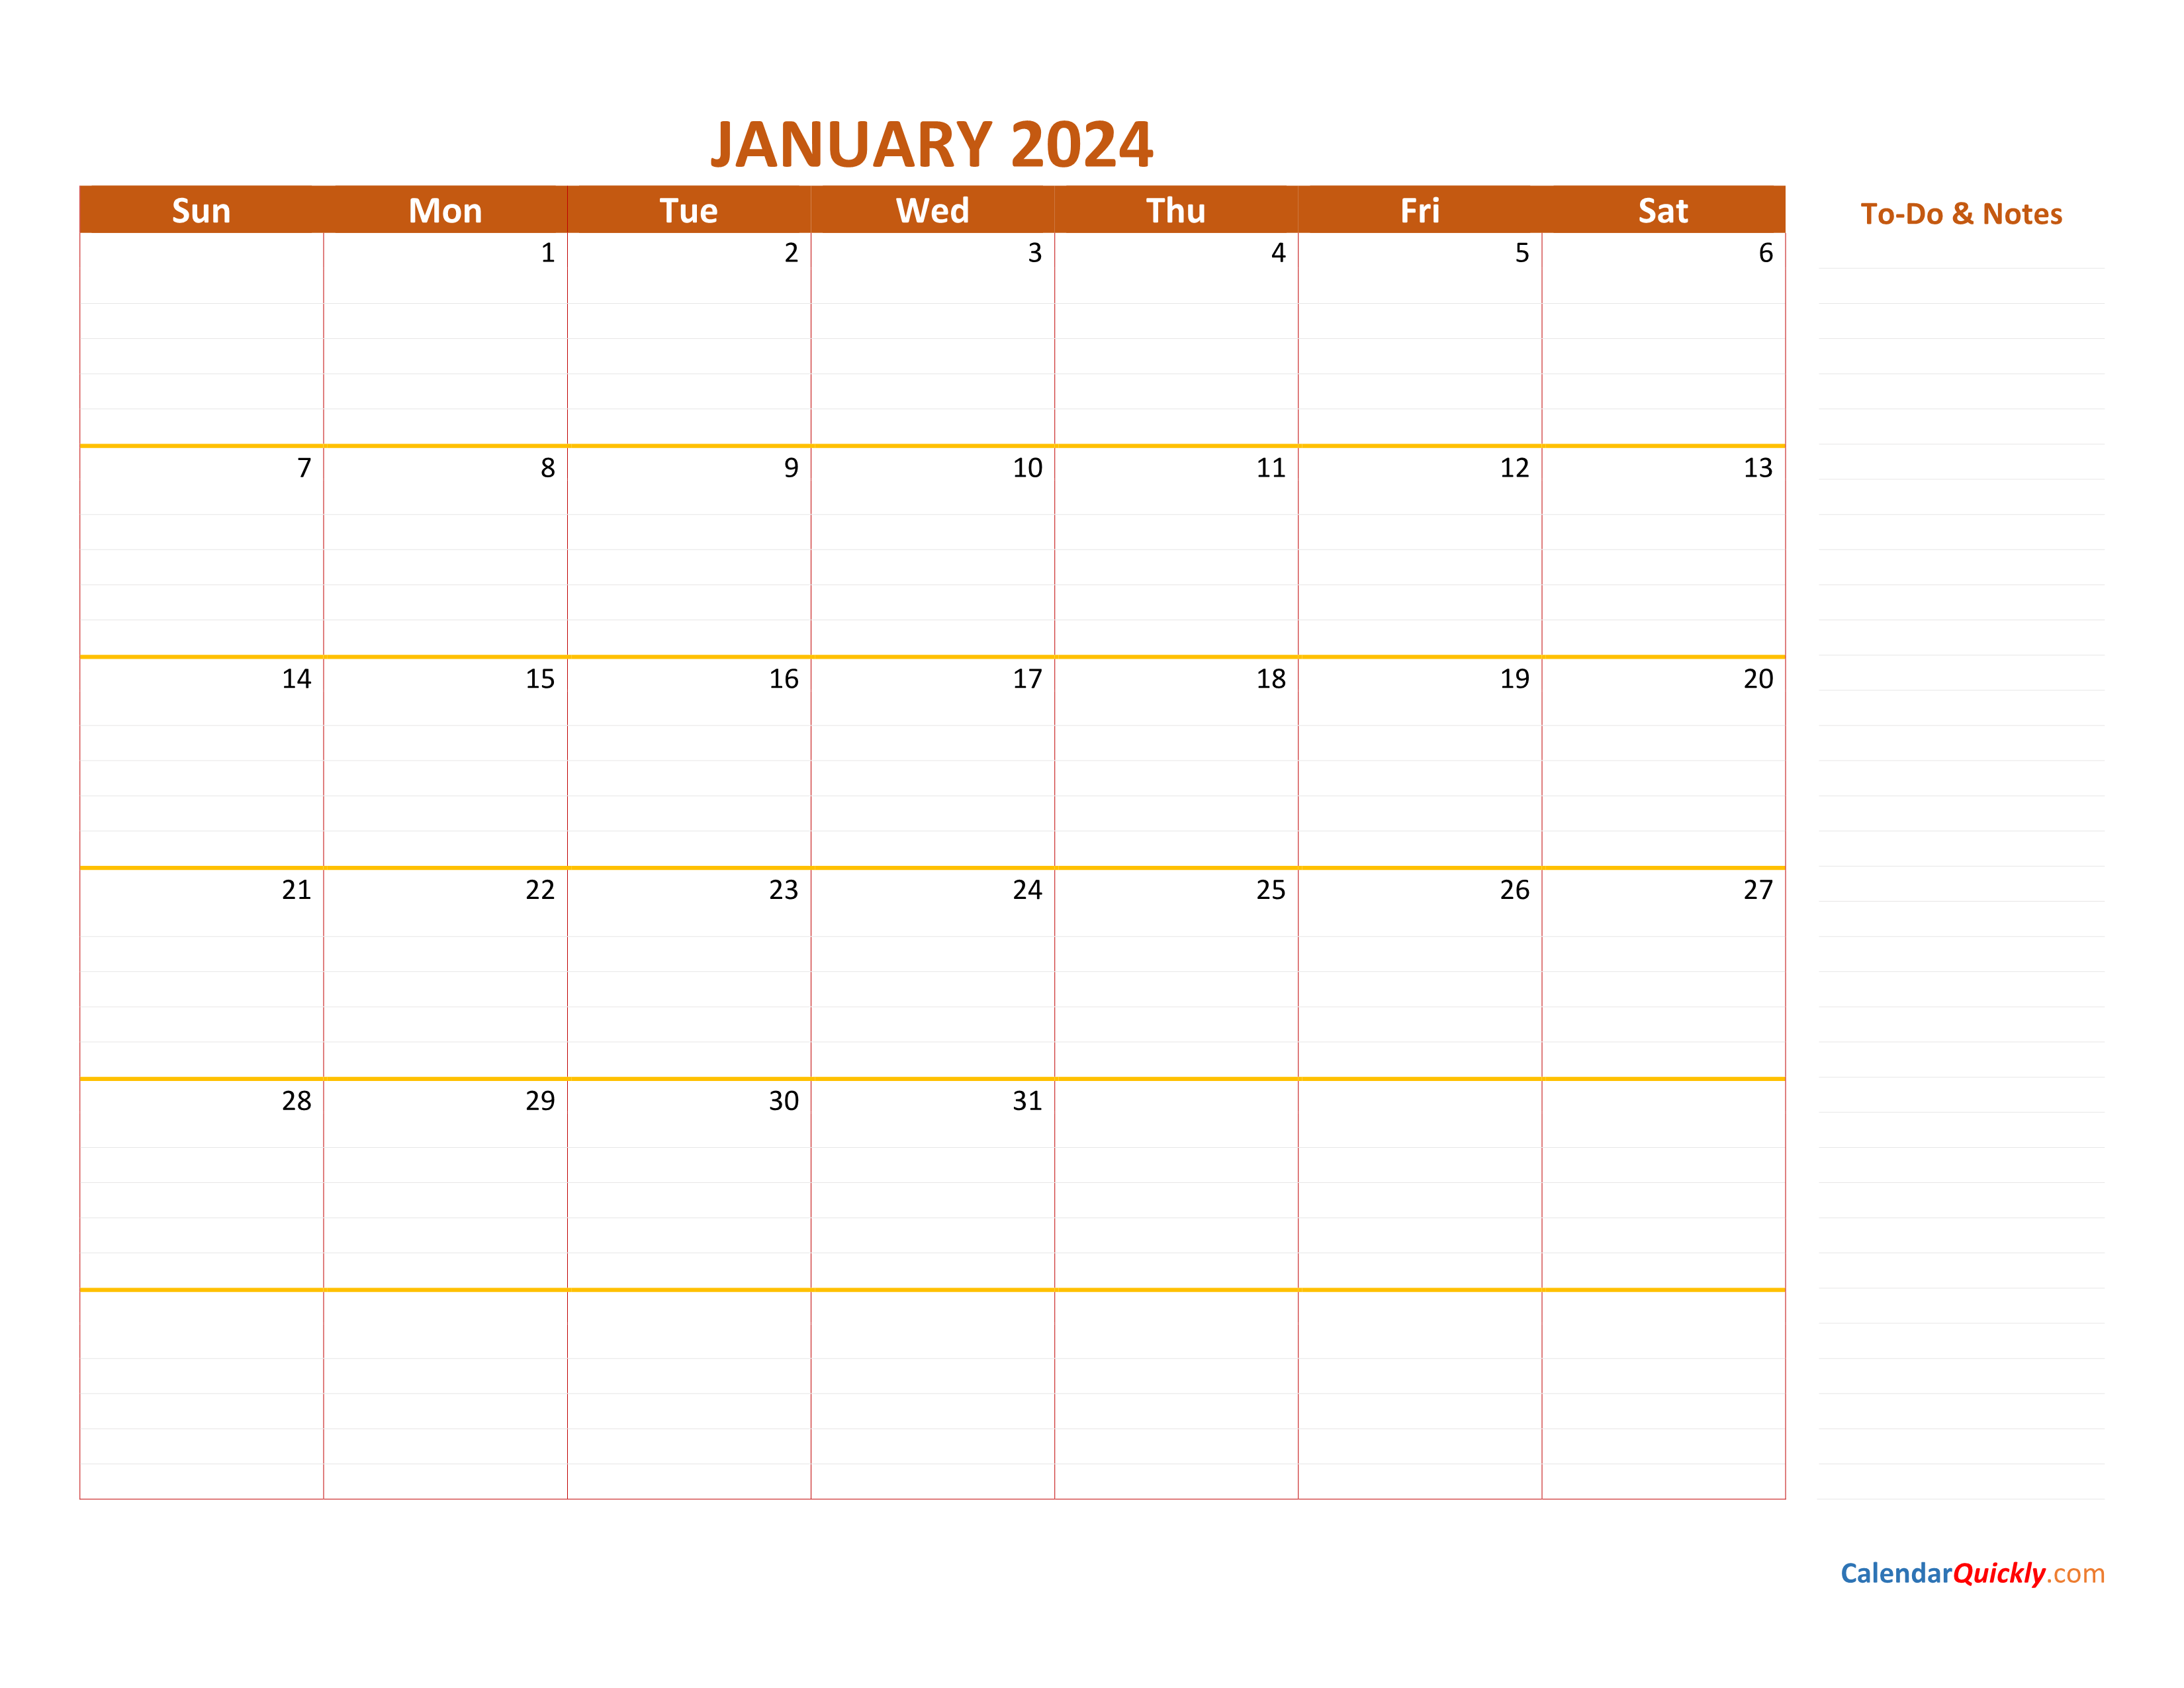 Monthly 2024 Calendar Calendar Quickly